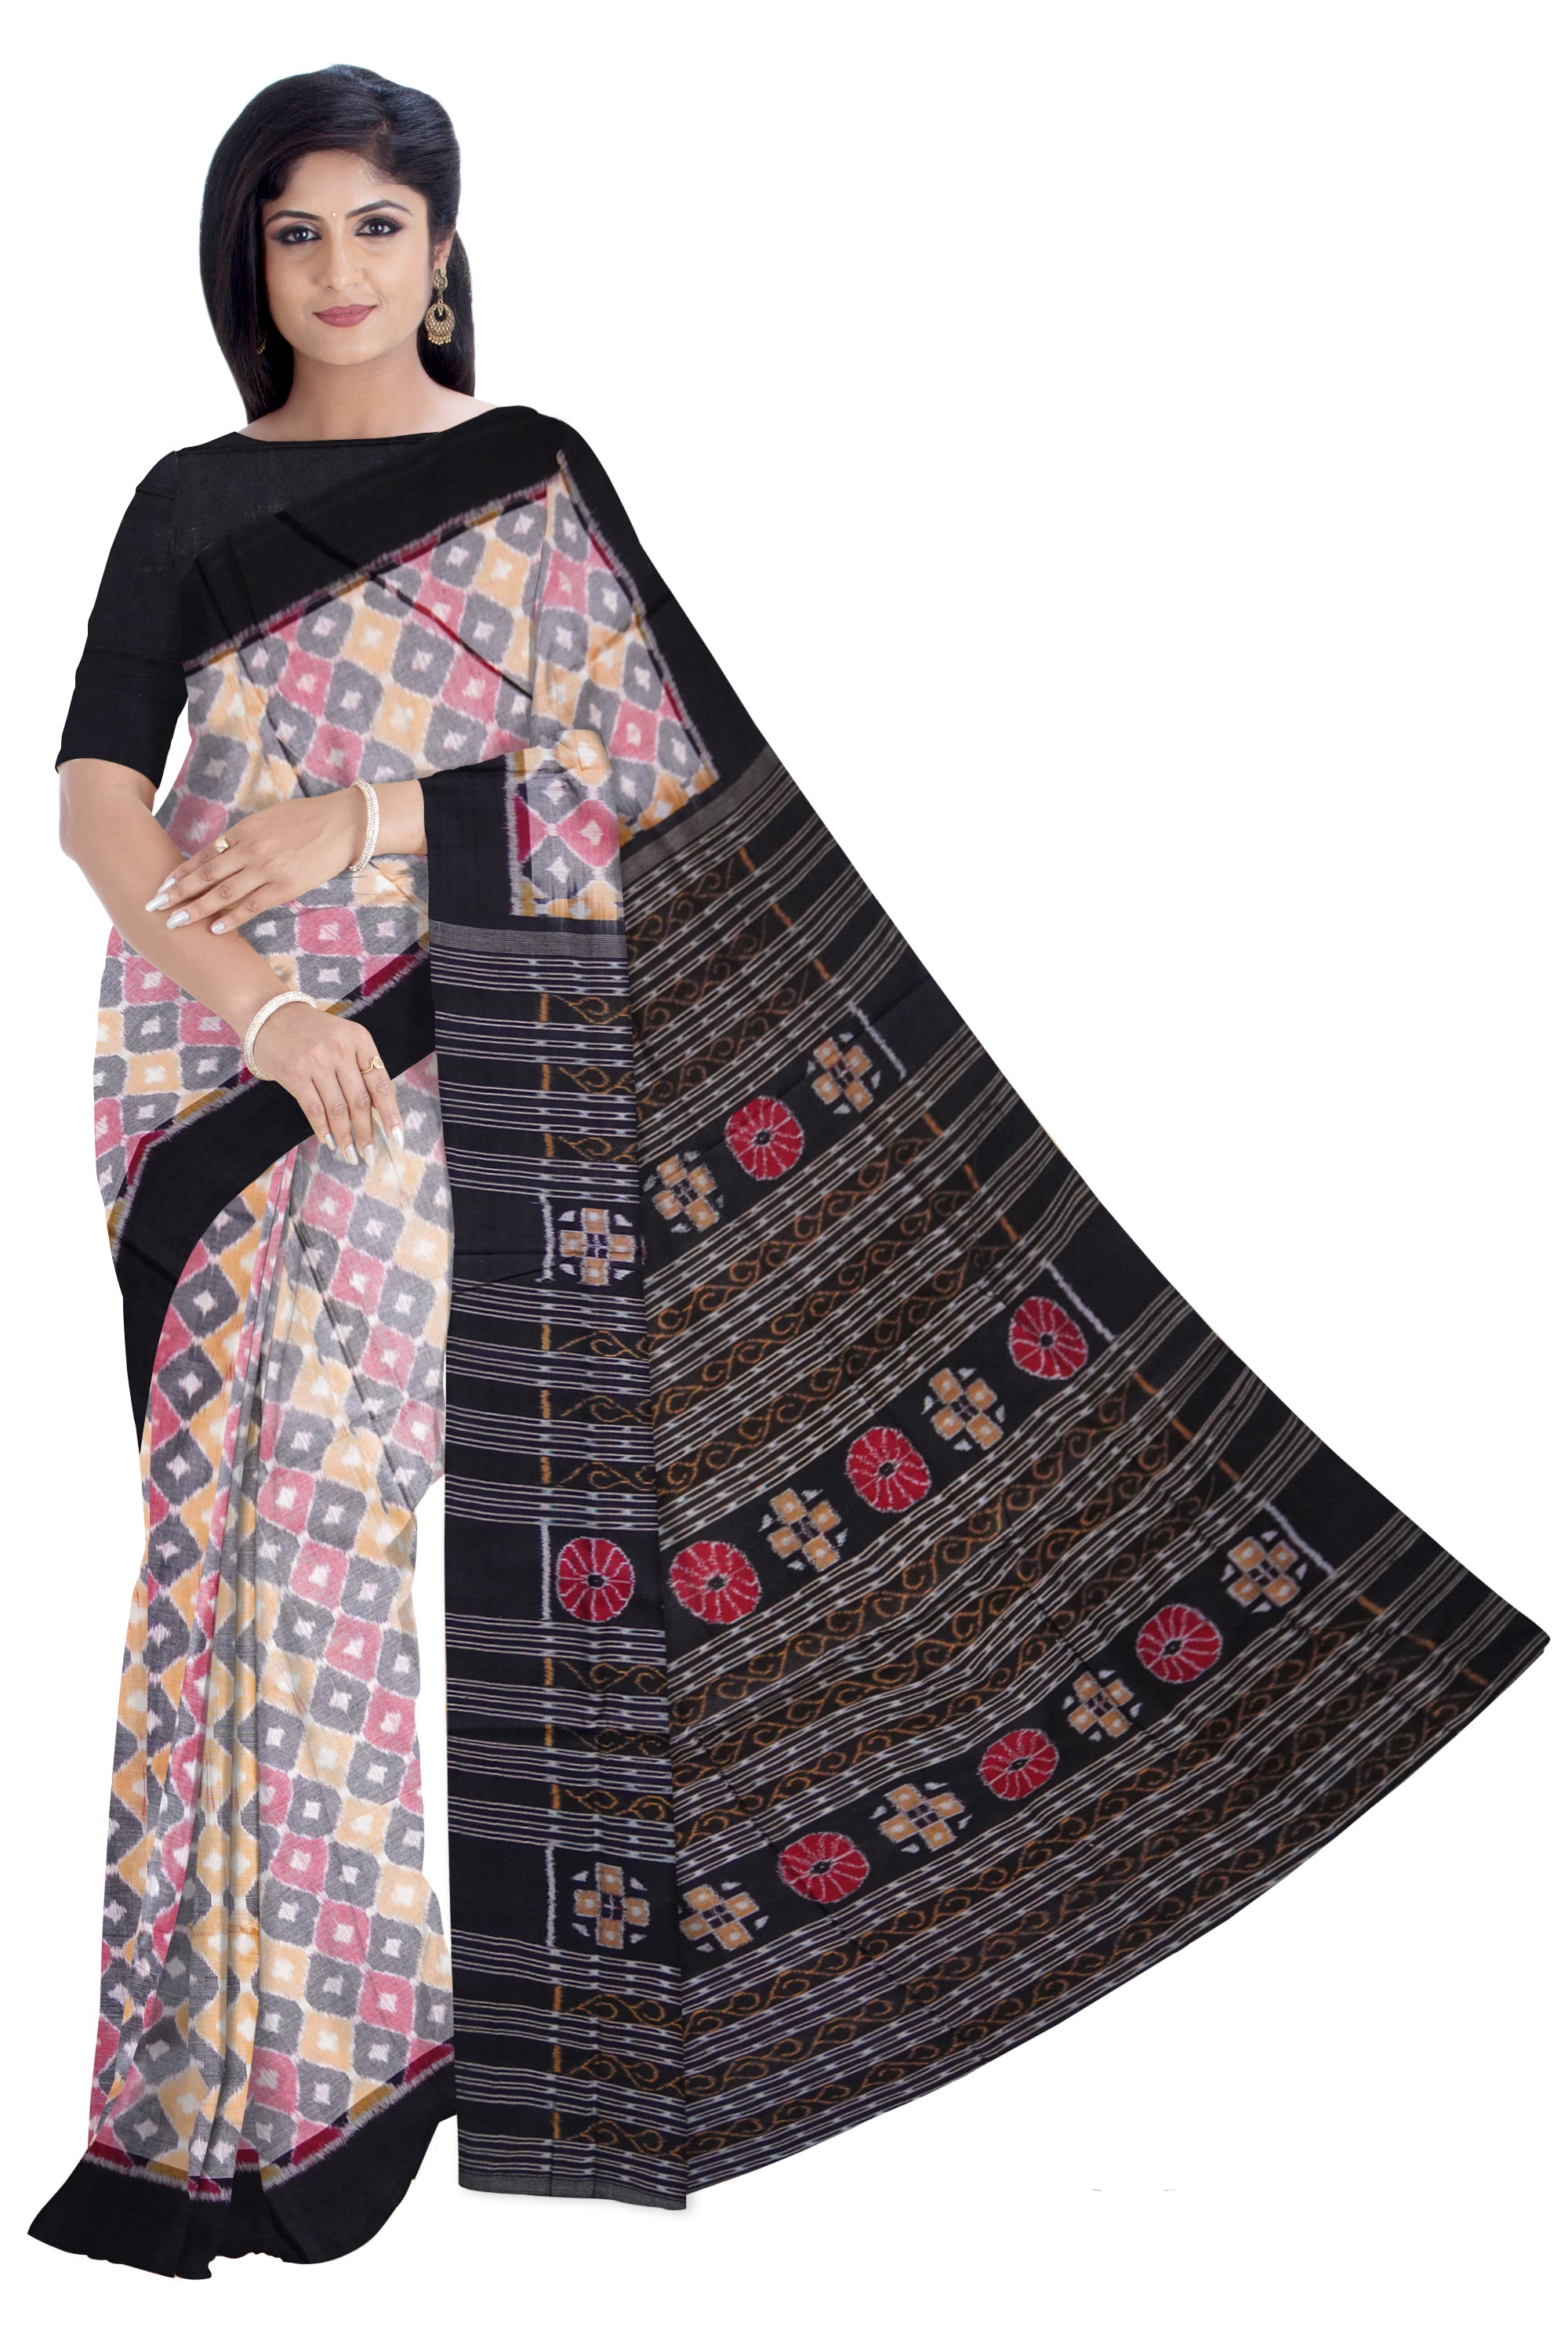 3D pattern with plain border and flowers design pallu in black and 3D colour sambalpuri saree. - Koshali Arts & Crafts Enterprise